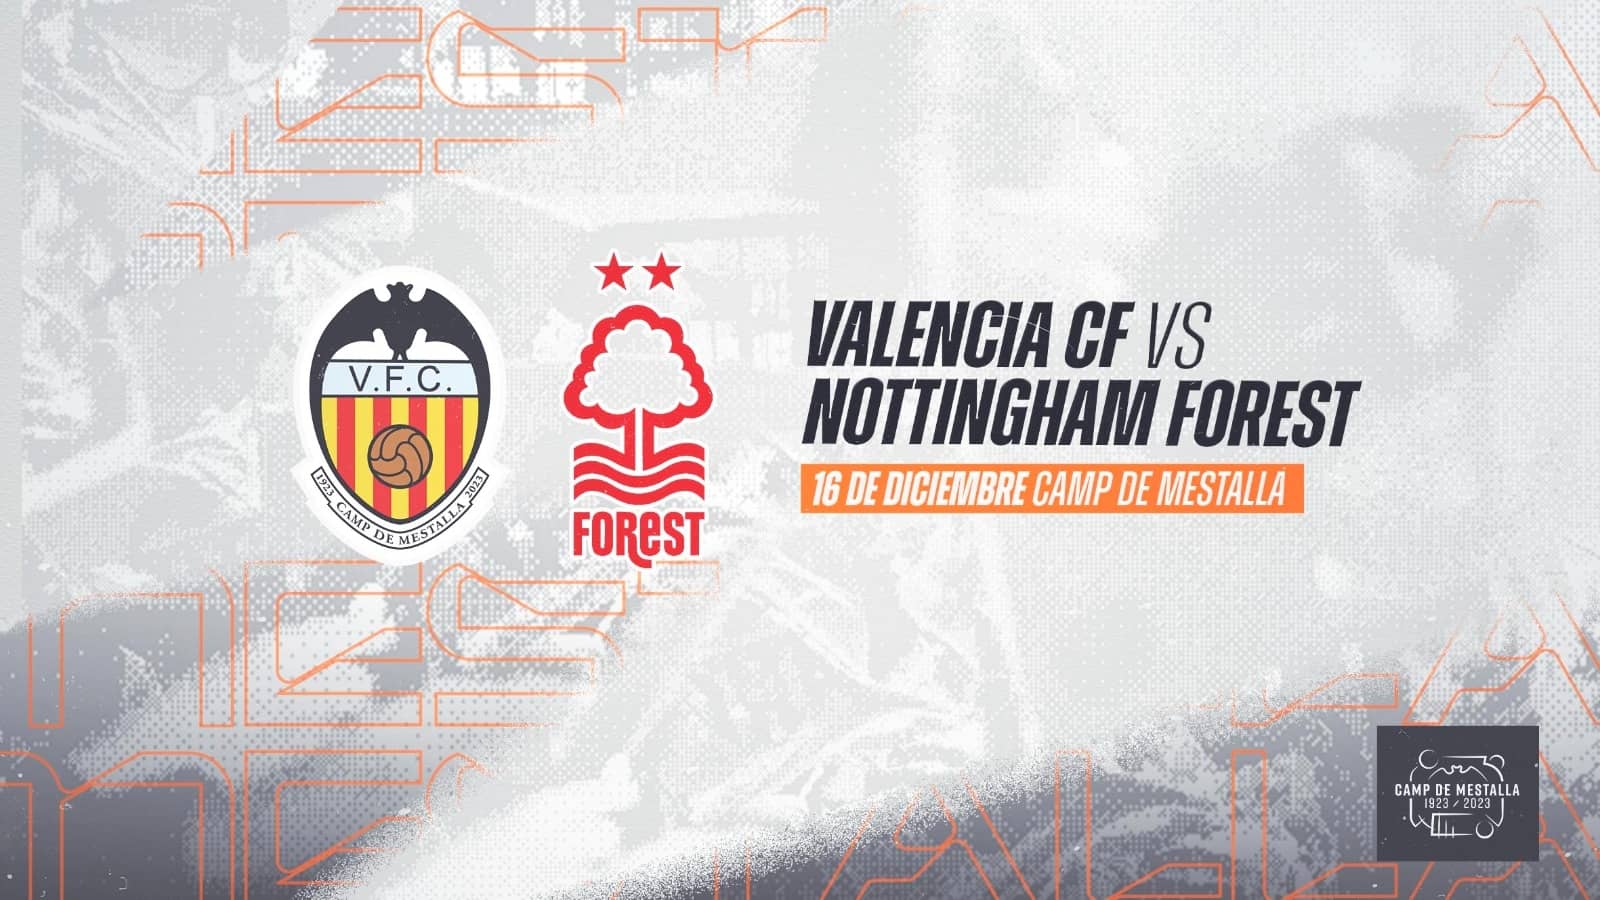 Valencia vs nottingham forest